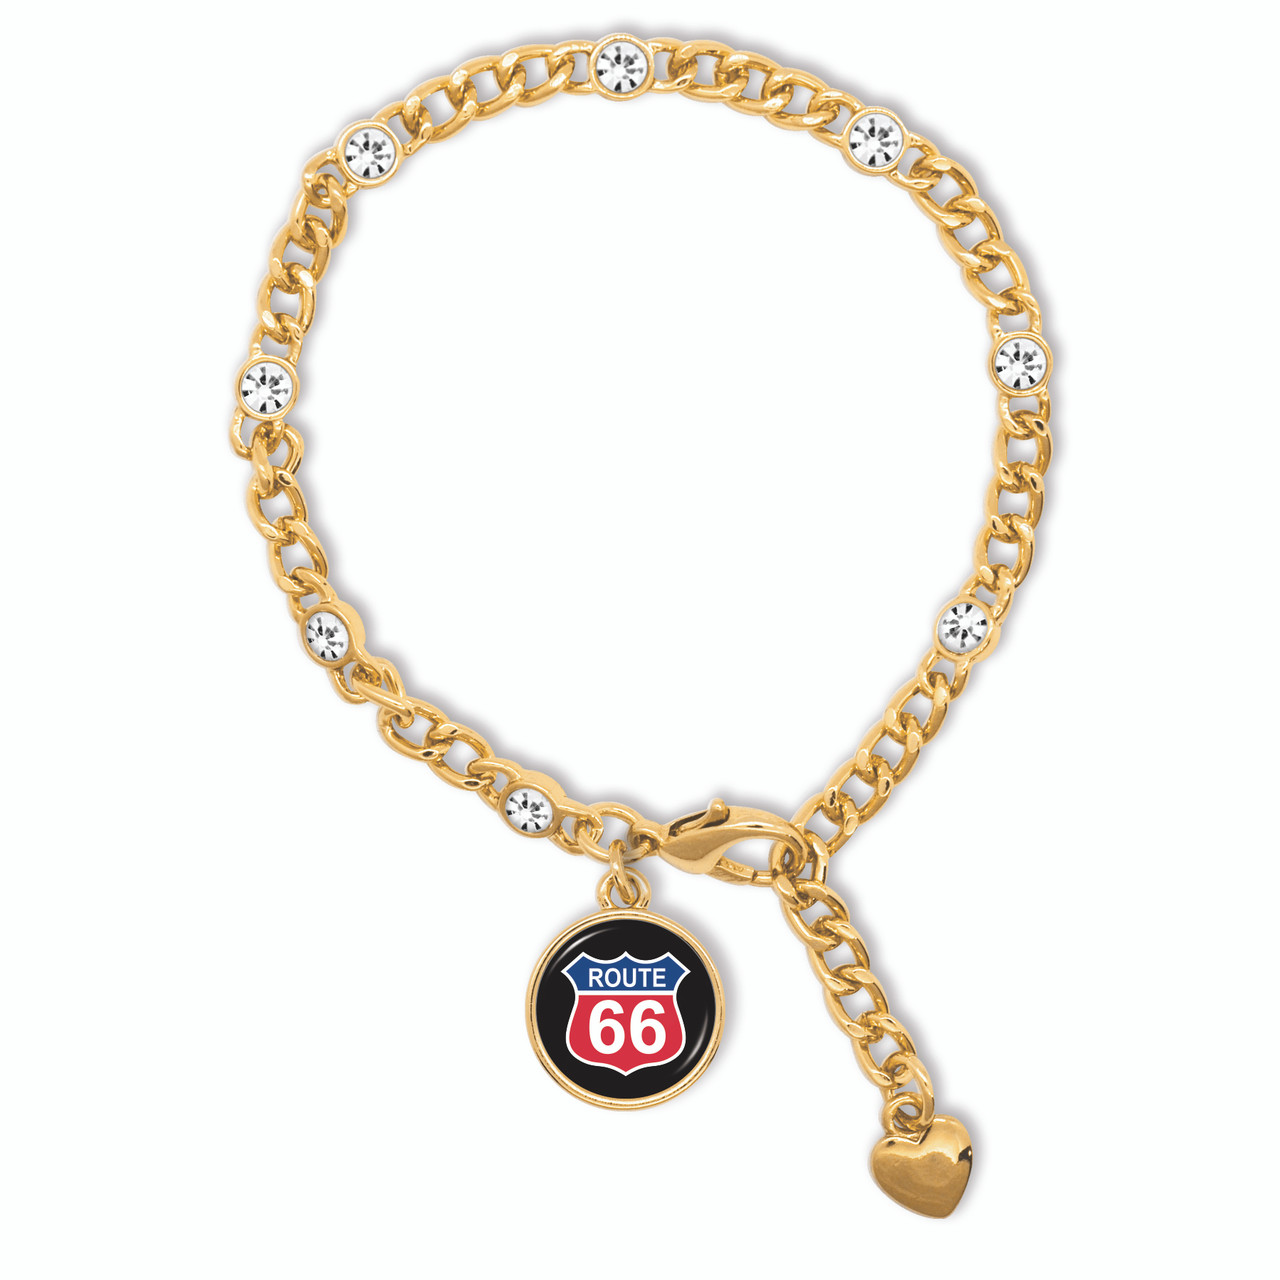 Route 66 Lydia Gold Bracelet